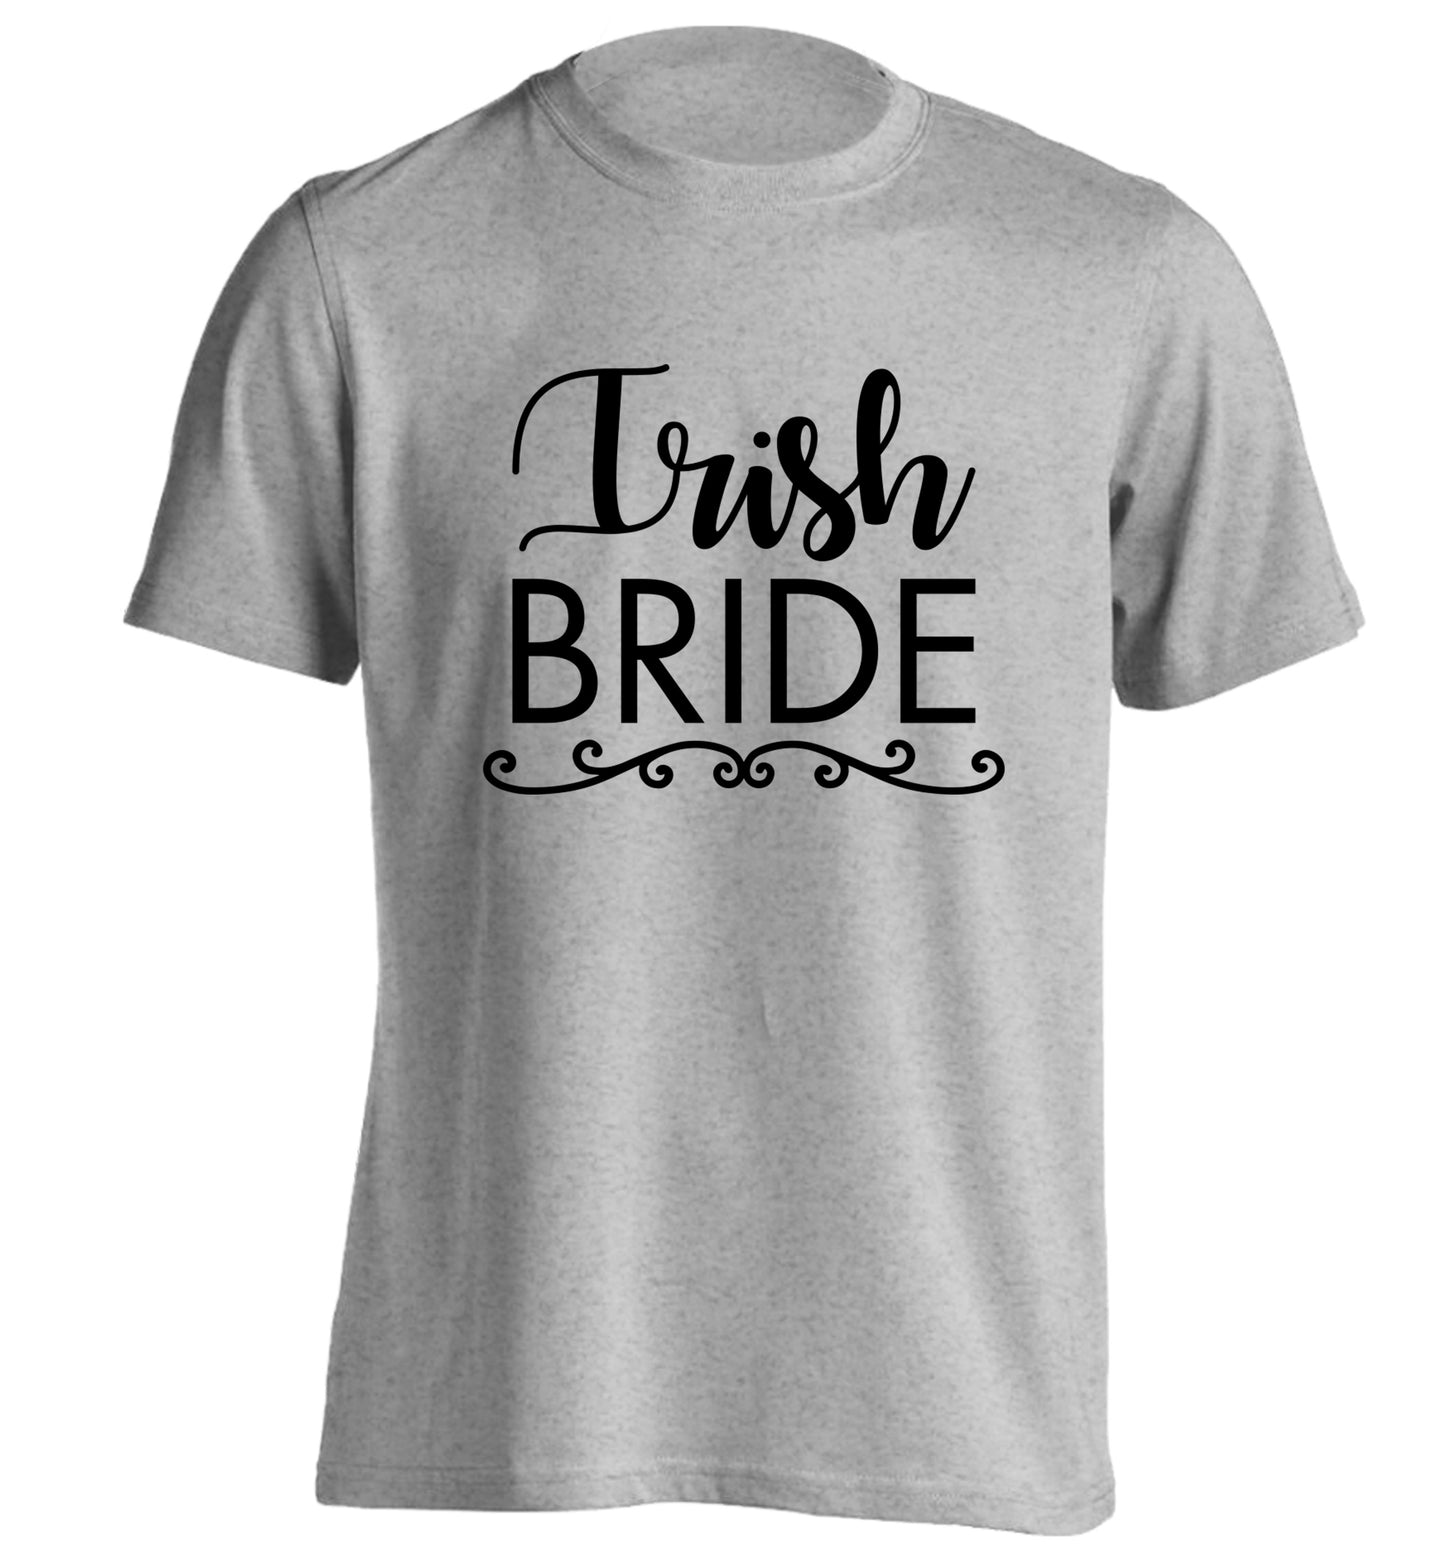 Irish bride adults unisex grey Tshirt 2XL